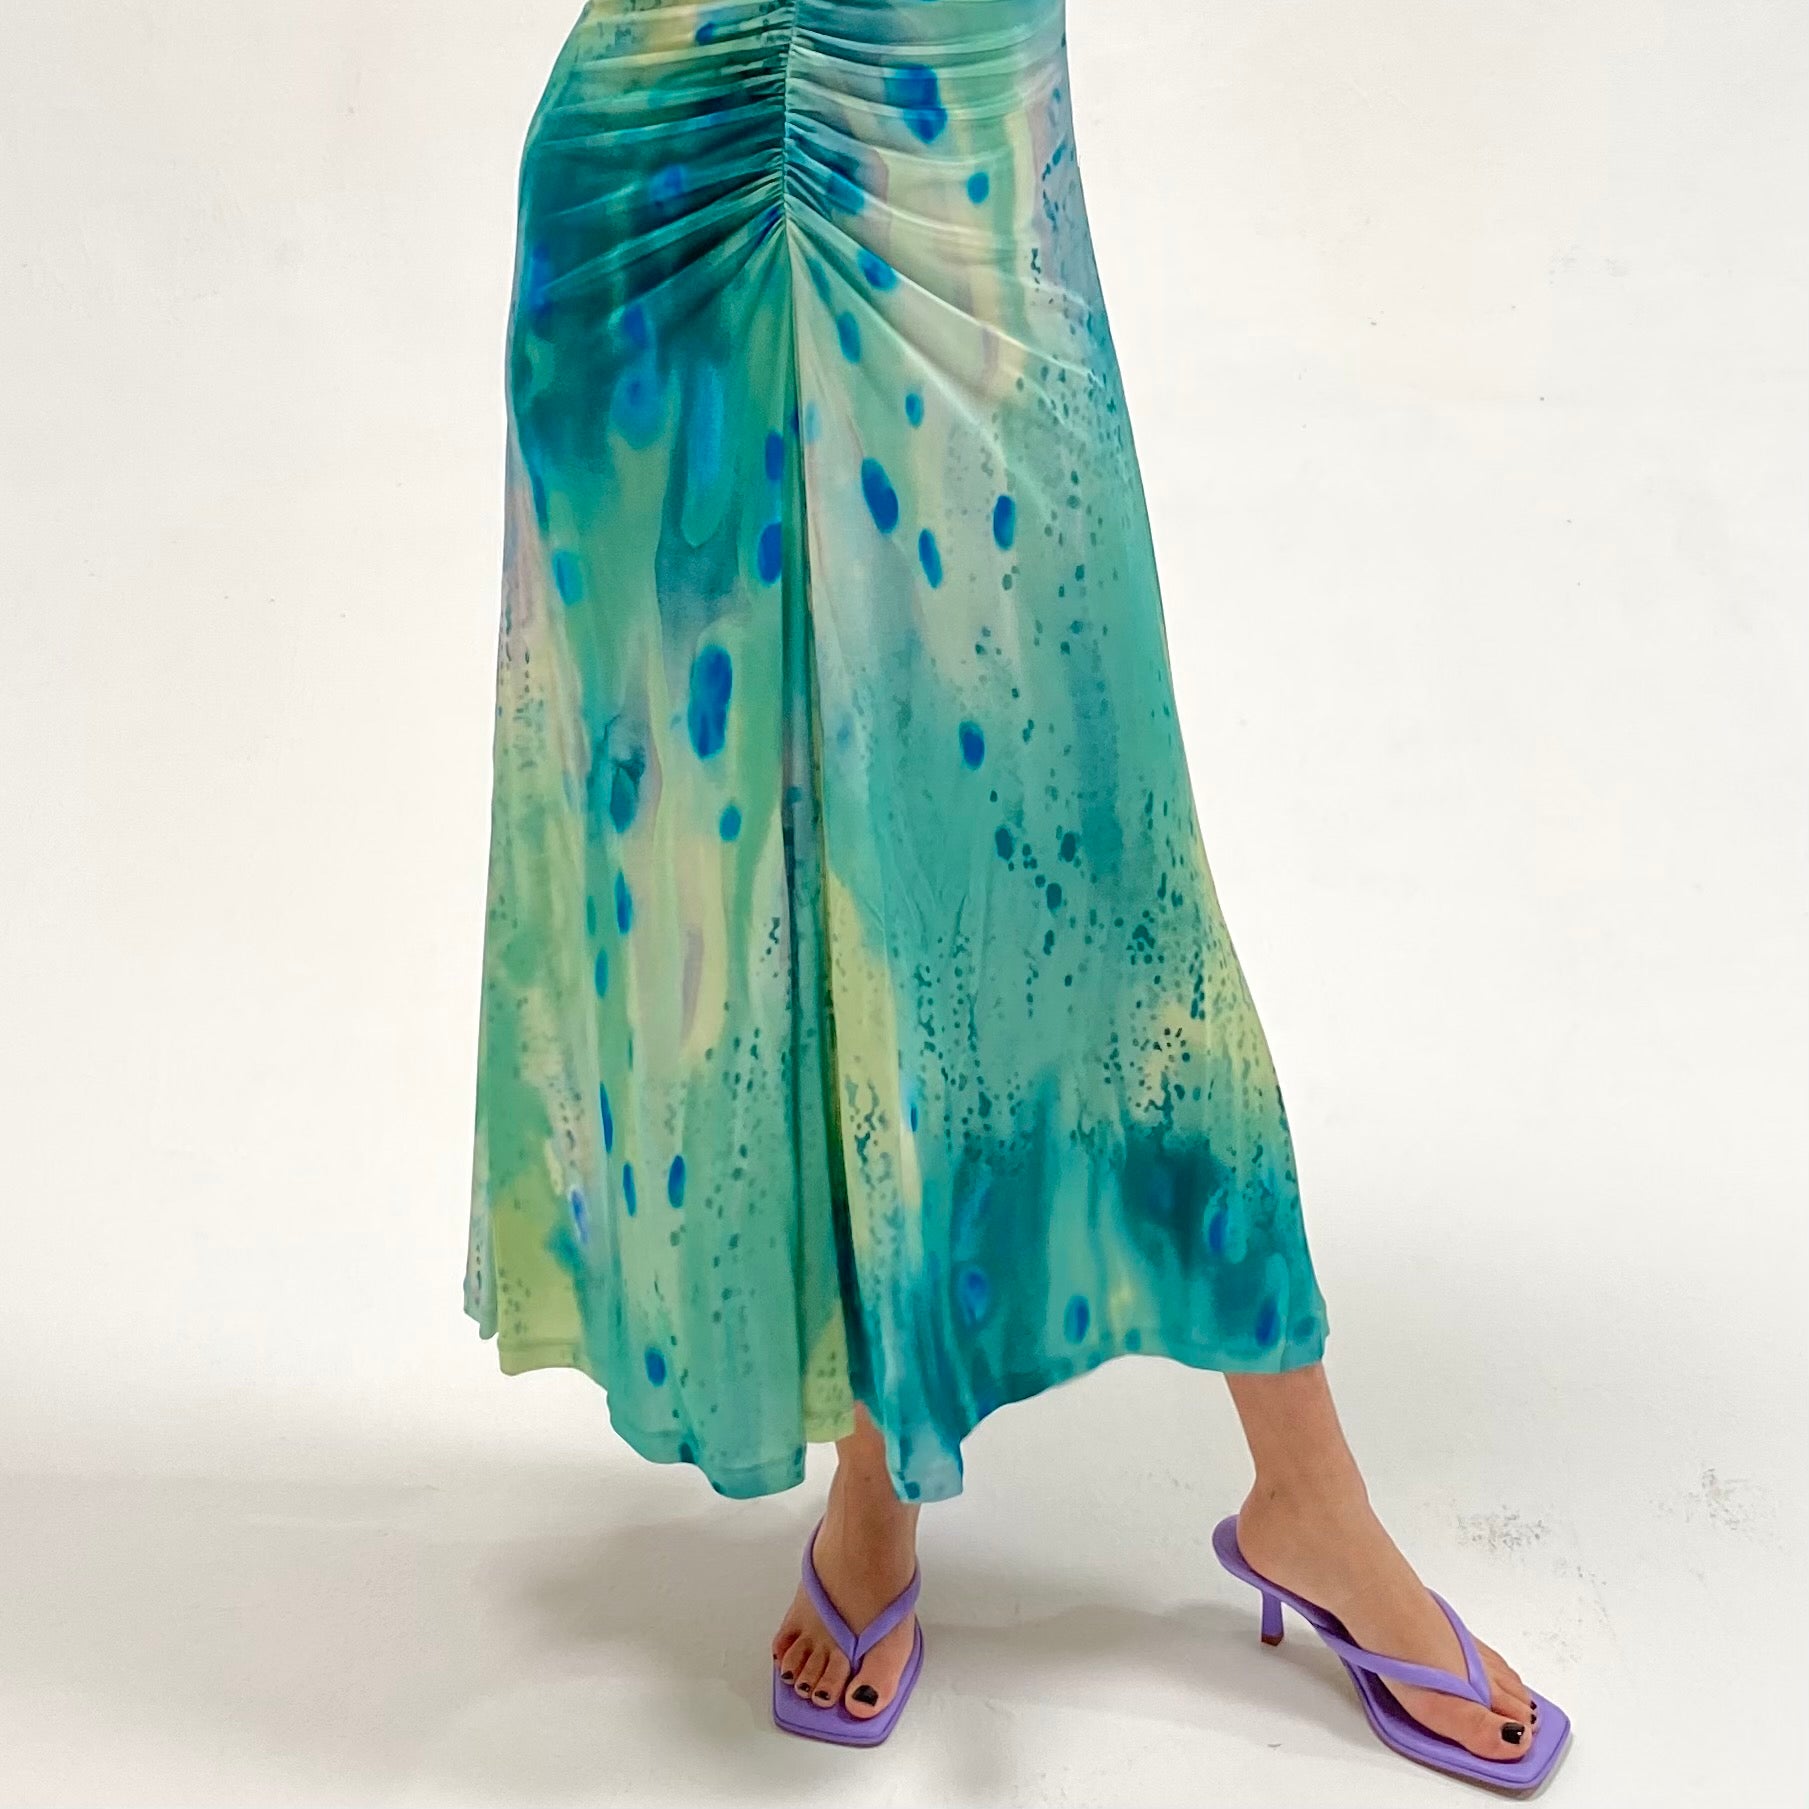 Max Mara Watercolor Midi Dress